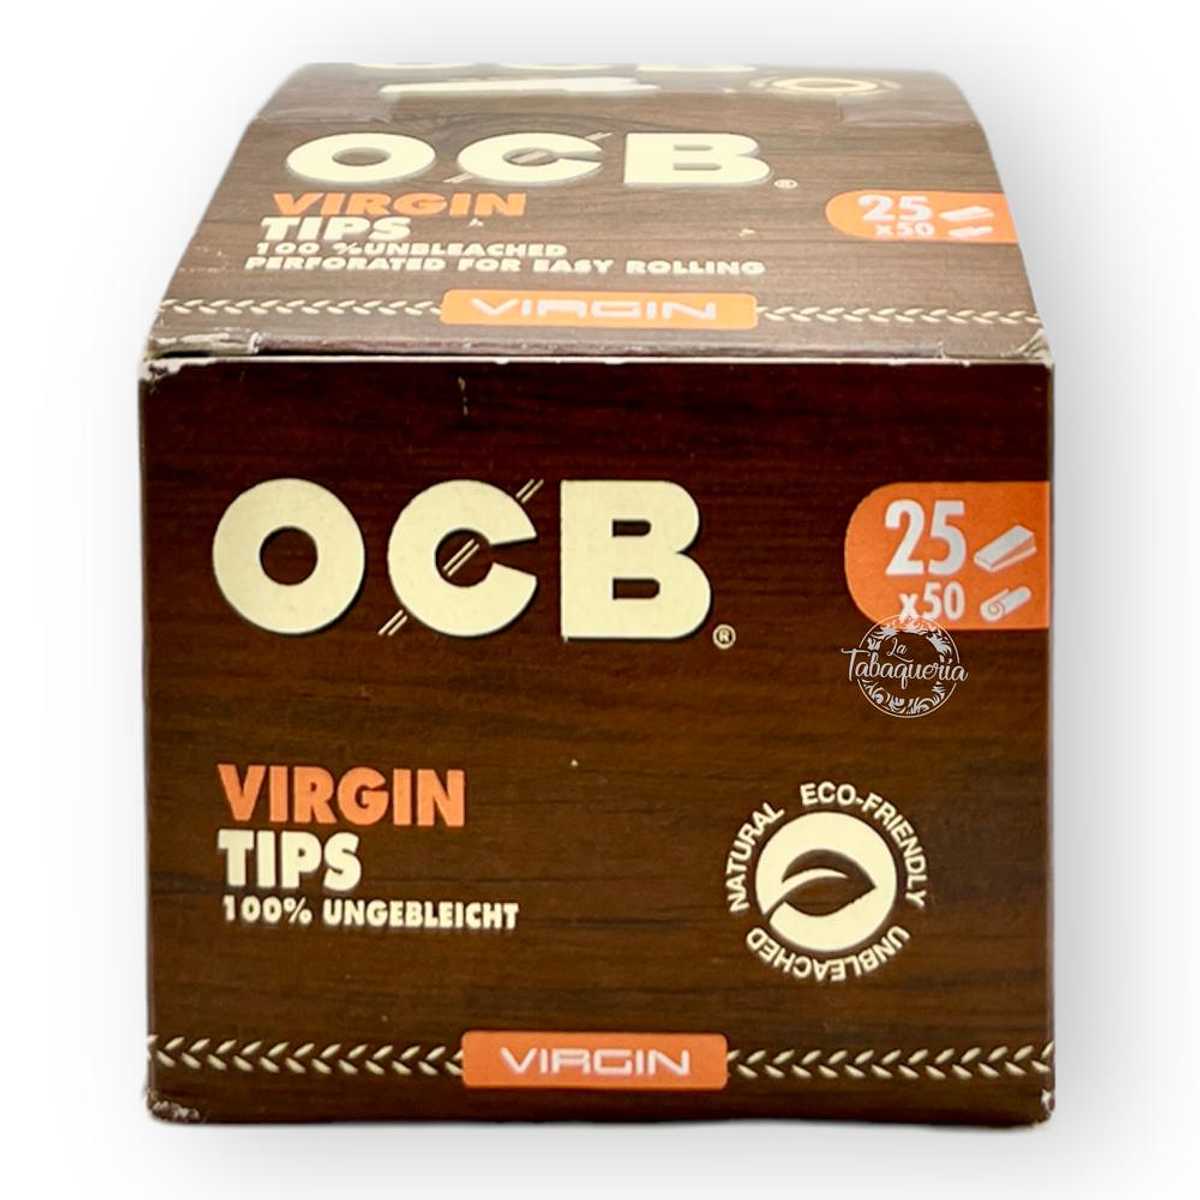 Tubo de Papel para Cigarros OCB - Cx com 100